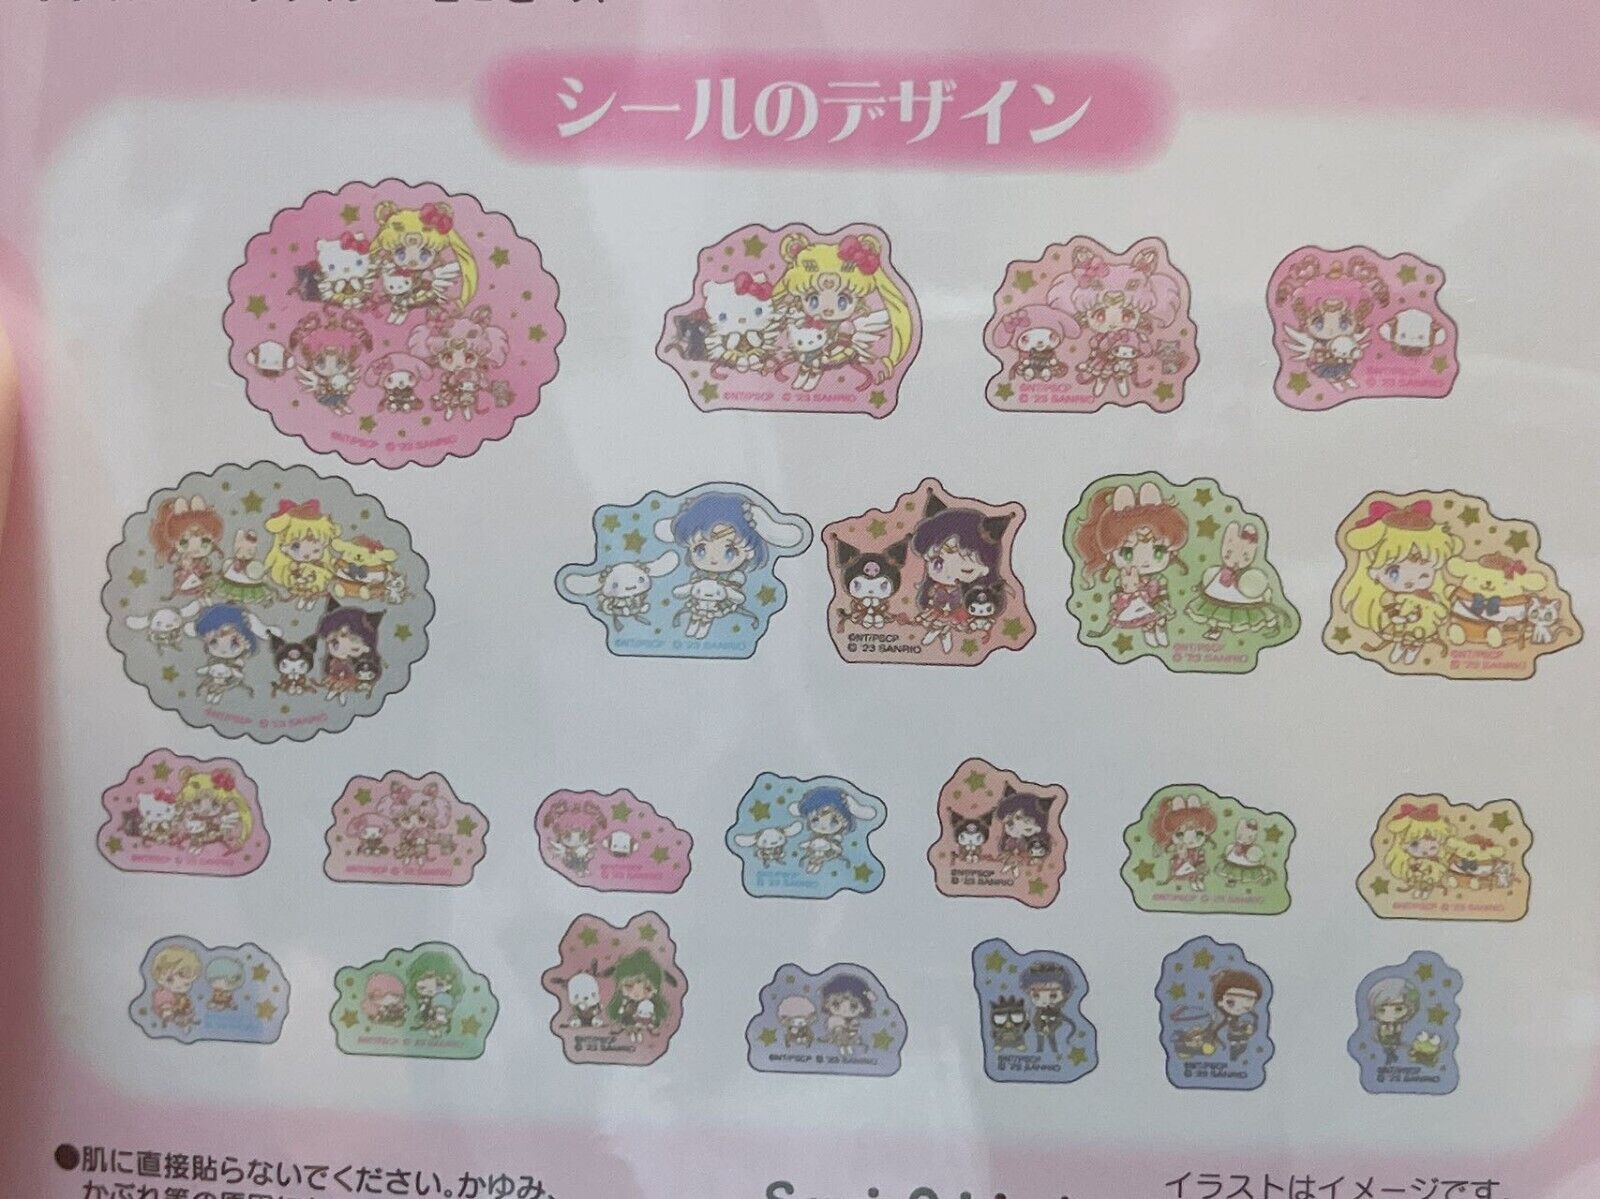 Lot of 44 pcs Sailor Moon Kawaii Sticker Pack Fast Shipping